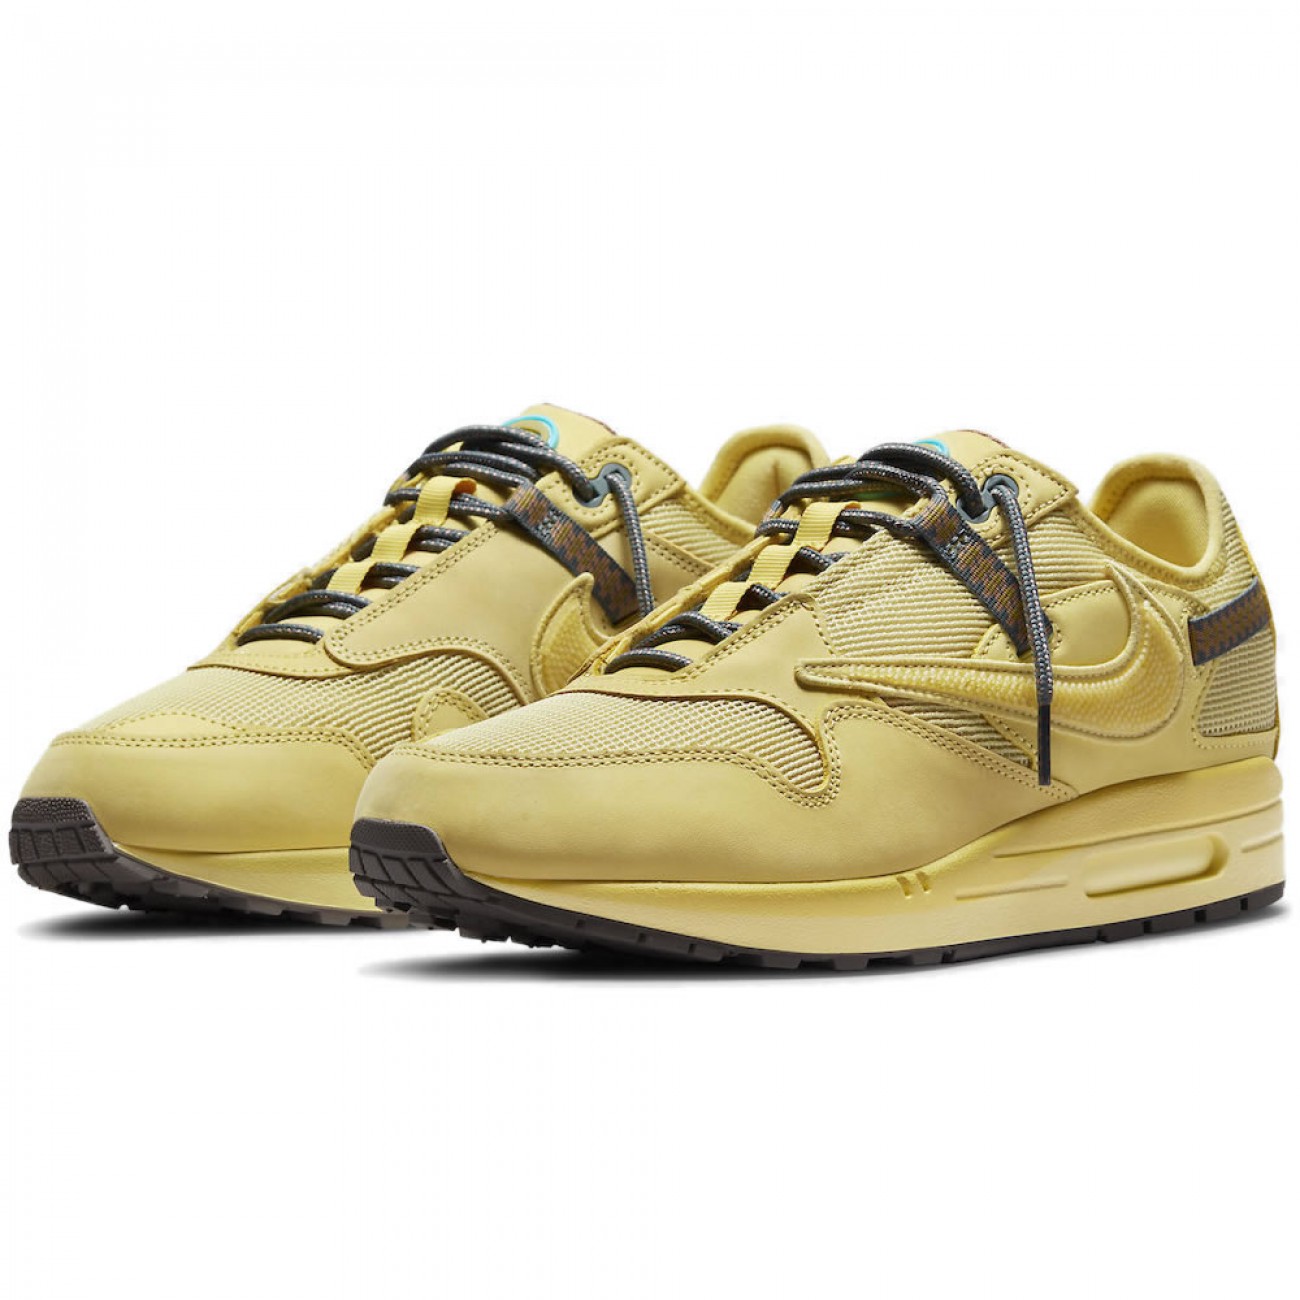 Travis Scott x Nike Air Max 1 "Saturn Gold" DO9392-700